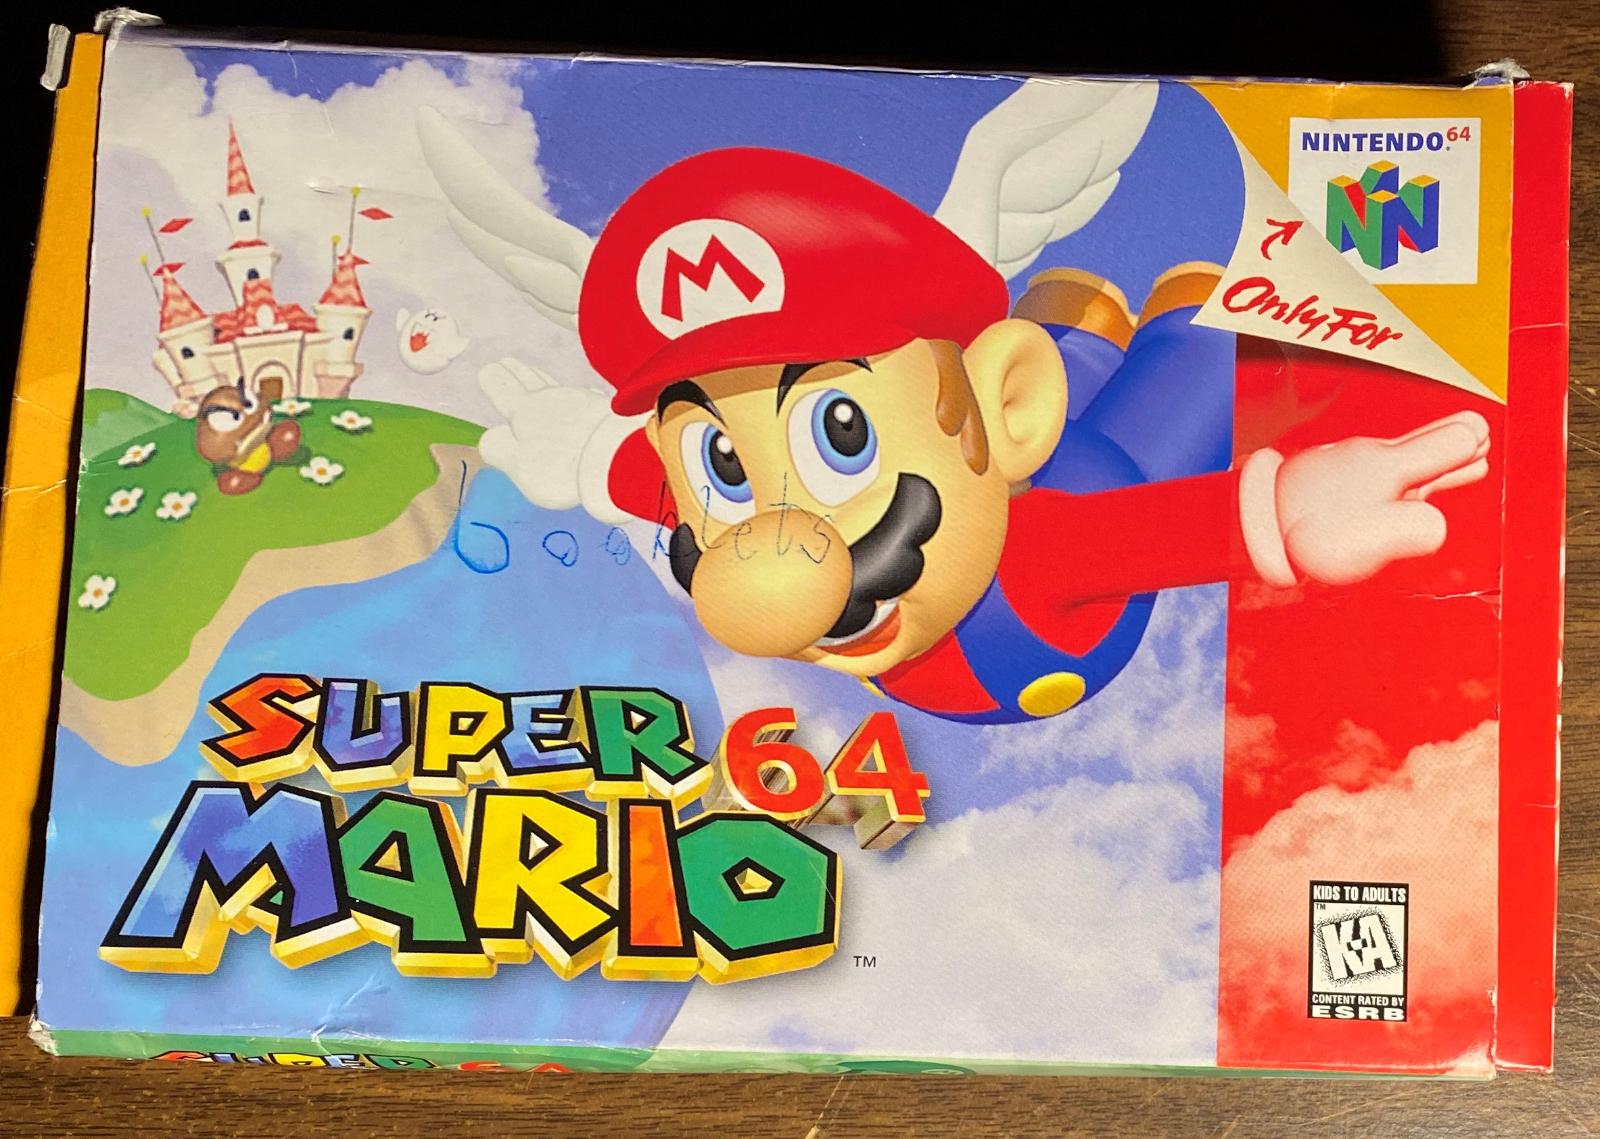 Super Mario 64 | Item, Box, and Manual | Nintendo 64